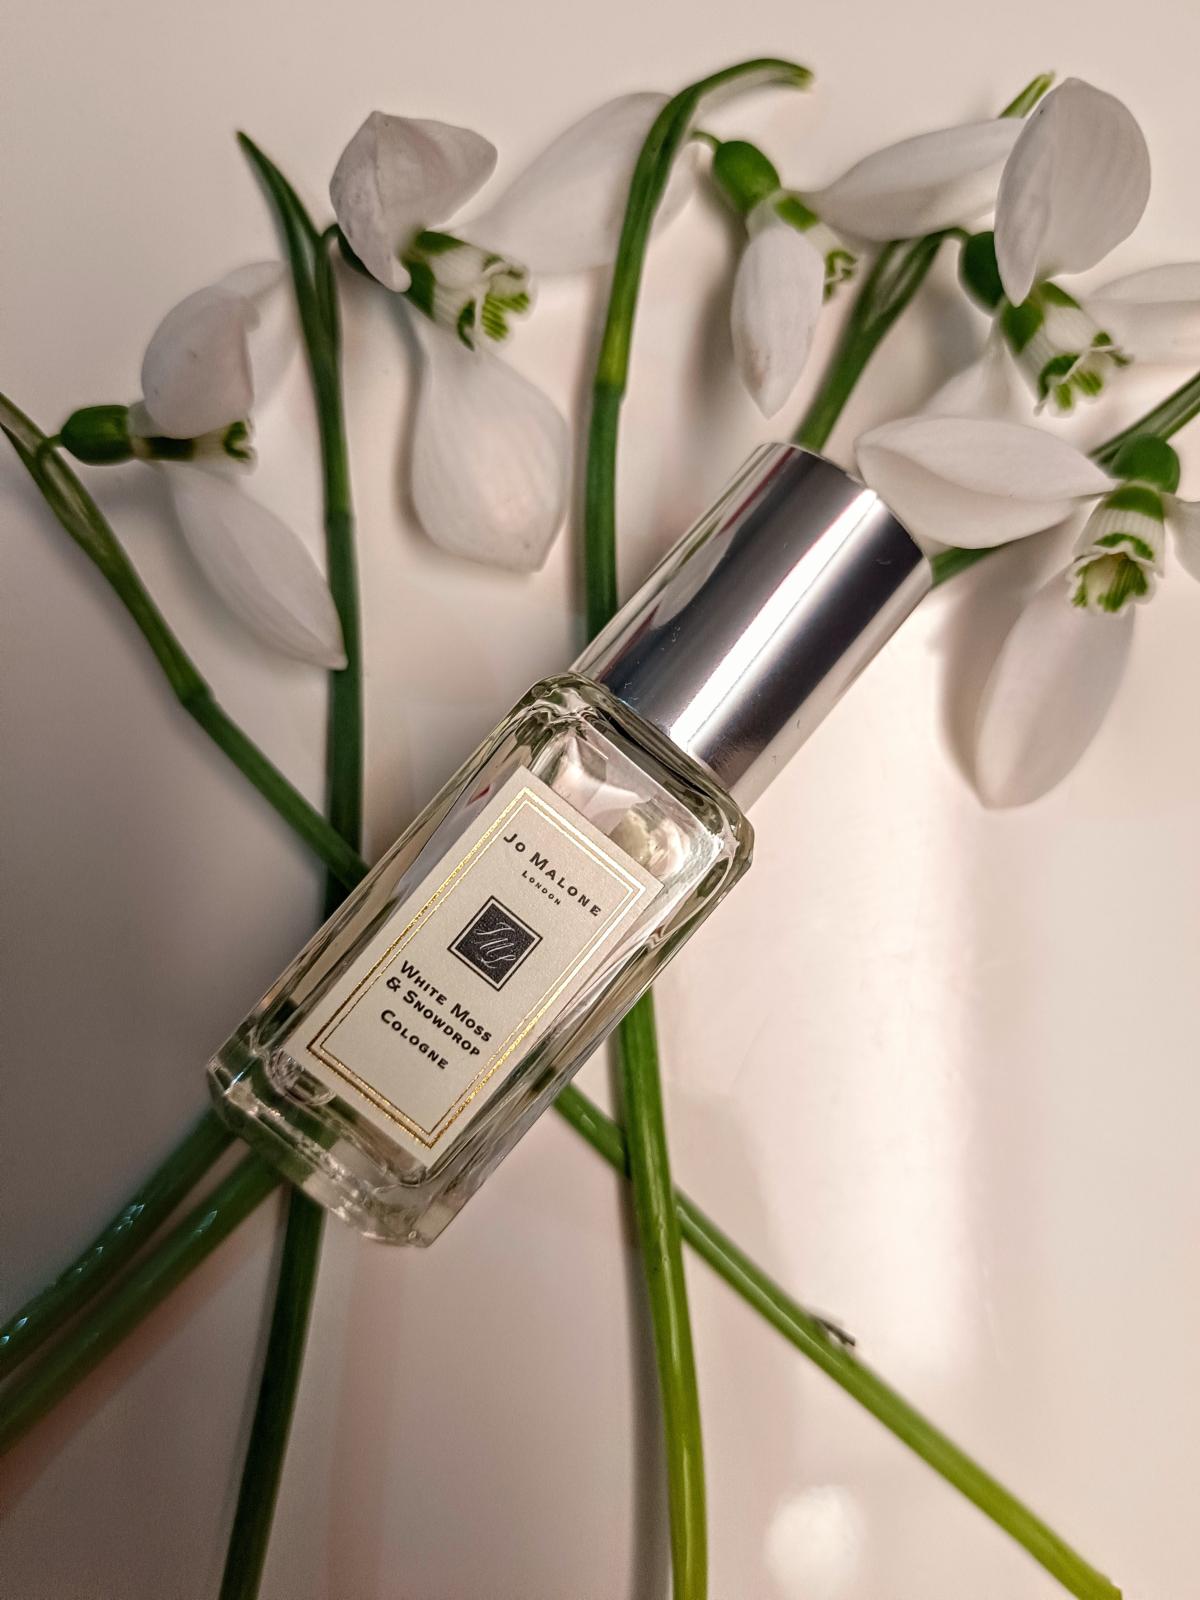 White Moss & Snowdrop Jo Malone London perfume - a fragrance for women ...